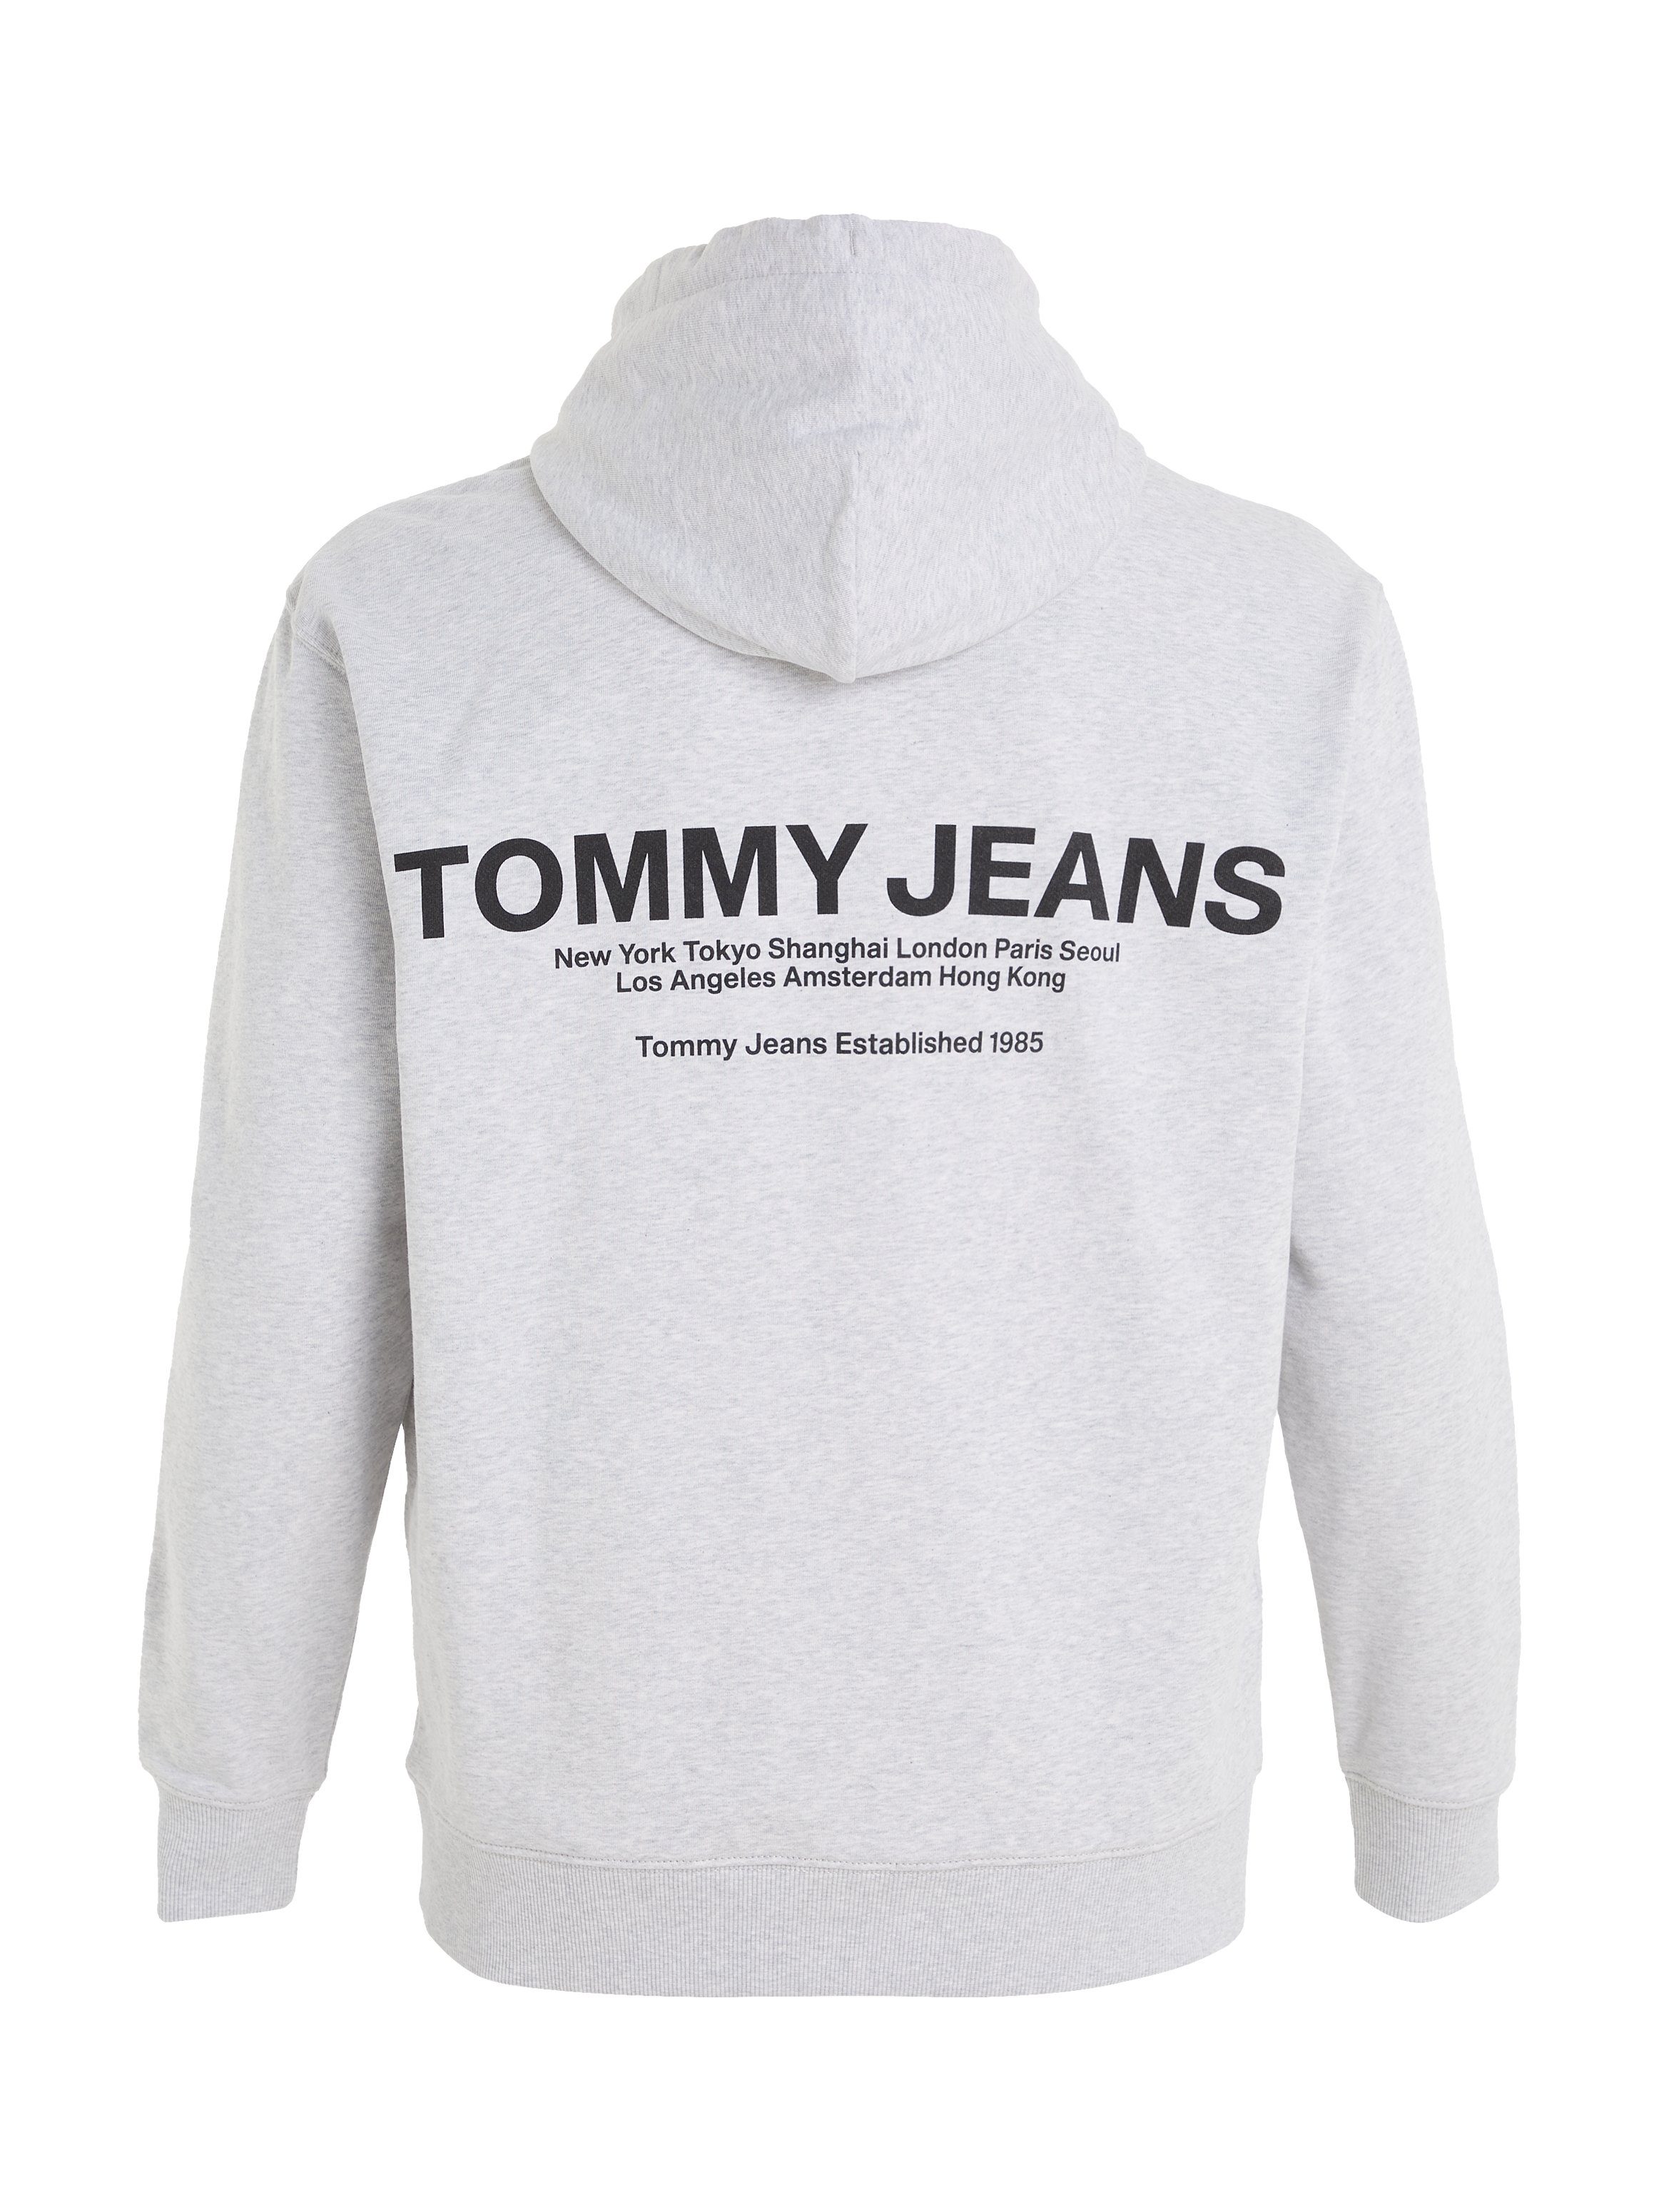 Tommy Jeans Plus Hoodie GRAPHIC PLUS Htr ENTRY REG TJM HOOD Silver Grey